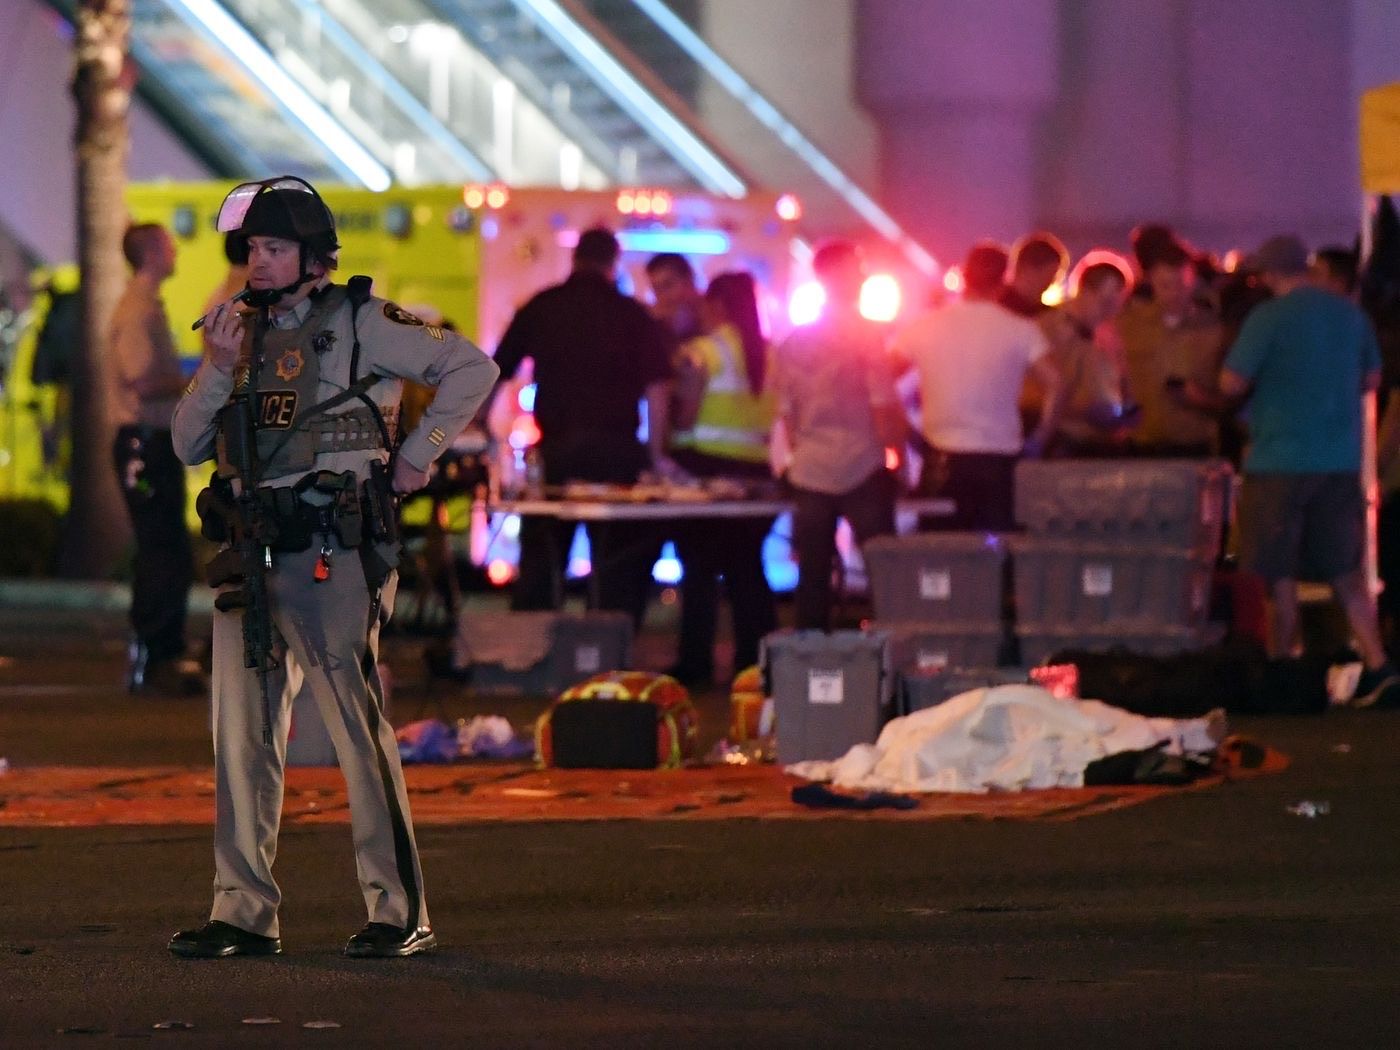 Patrol Supervisor speaking on radio at scene of mass shooting in Las Vegas